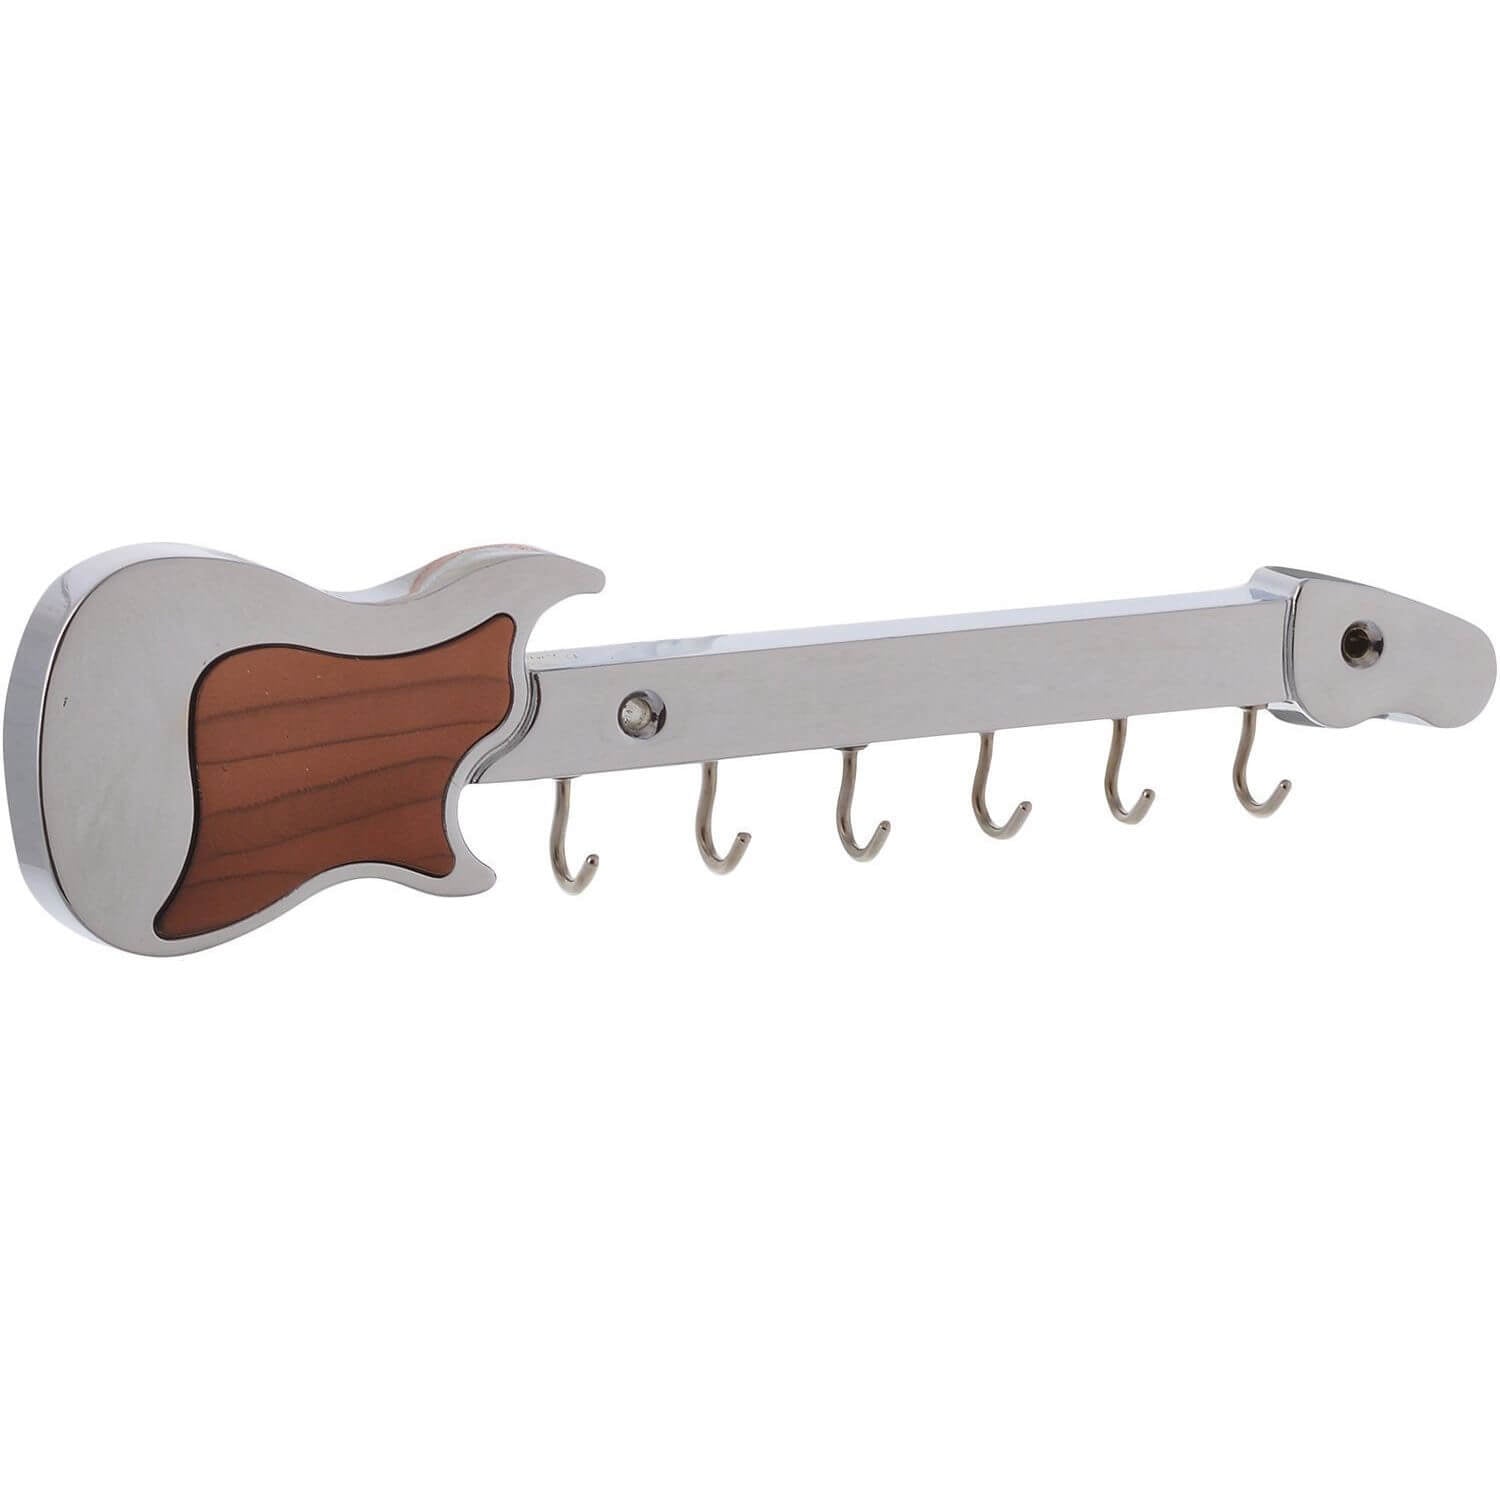 Fish Antique Key Holder for Wall - 6 Pin Key Hanging Hooks Rail